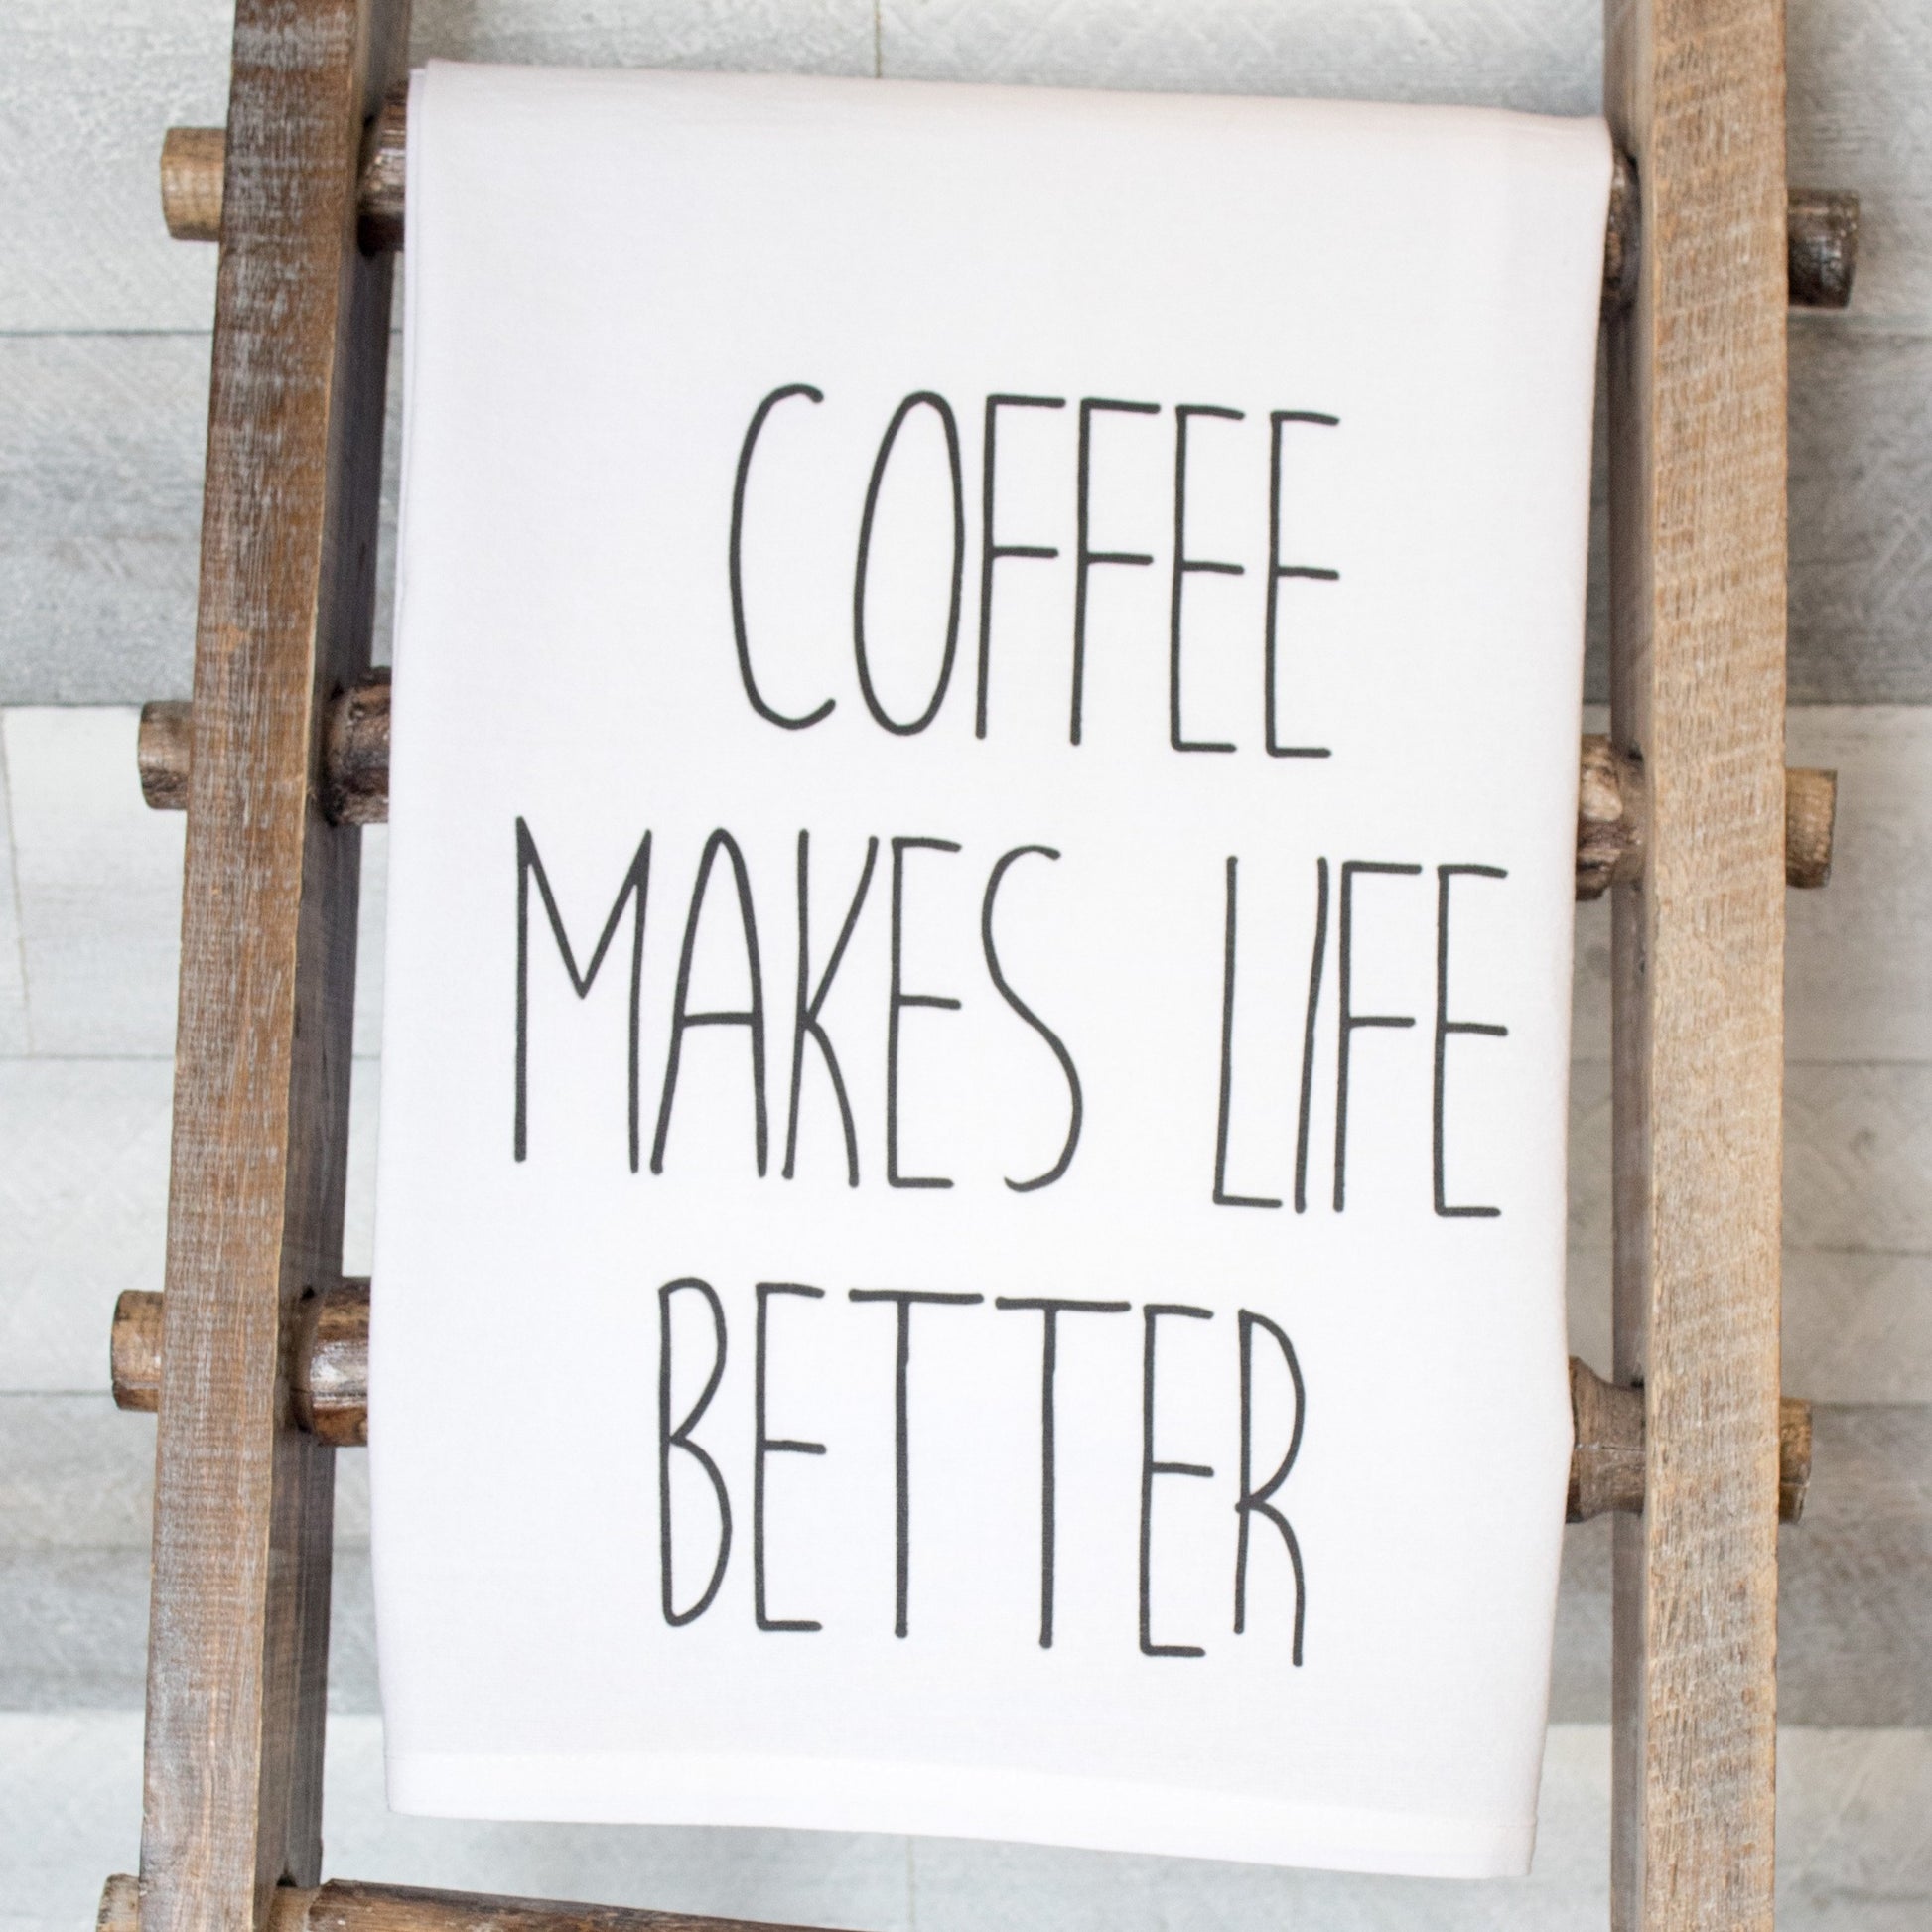 Coffee Makes Life Better premium tea towel